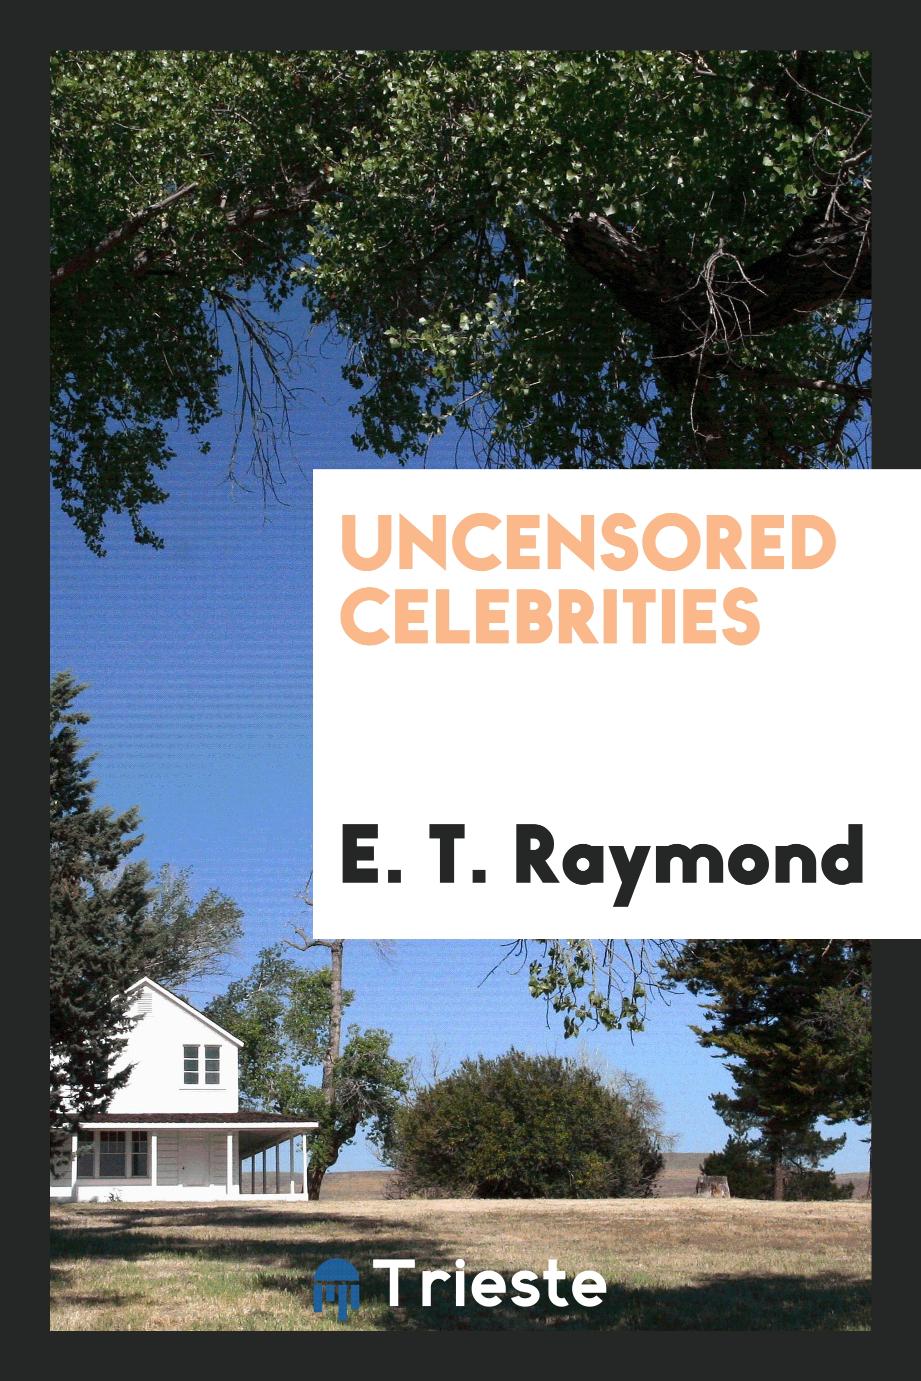 E. T. Raymond - Uncensored celebrities